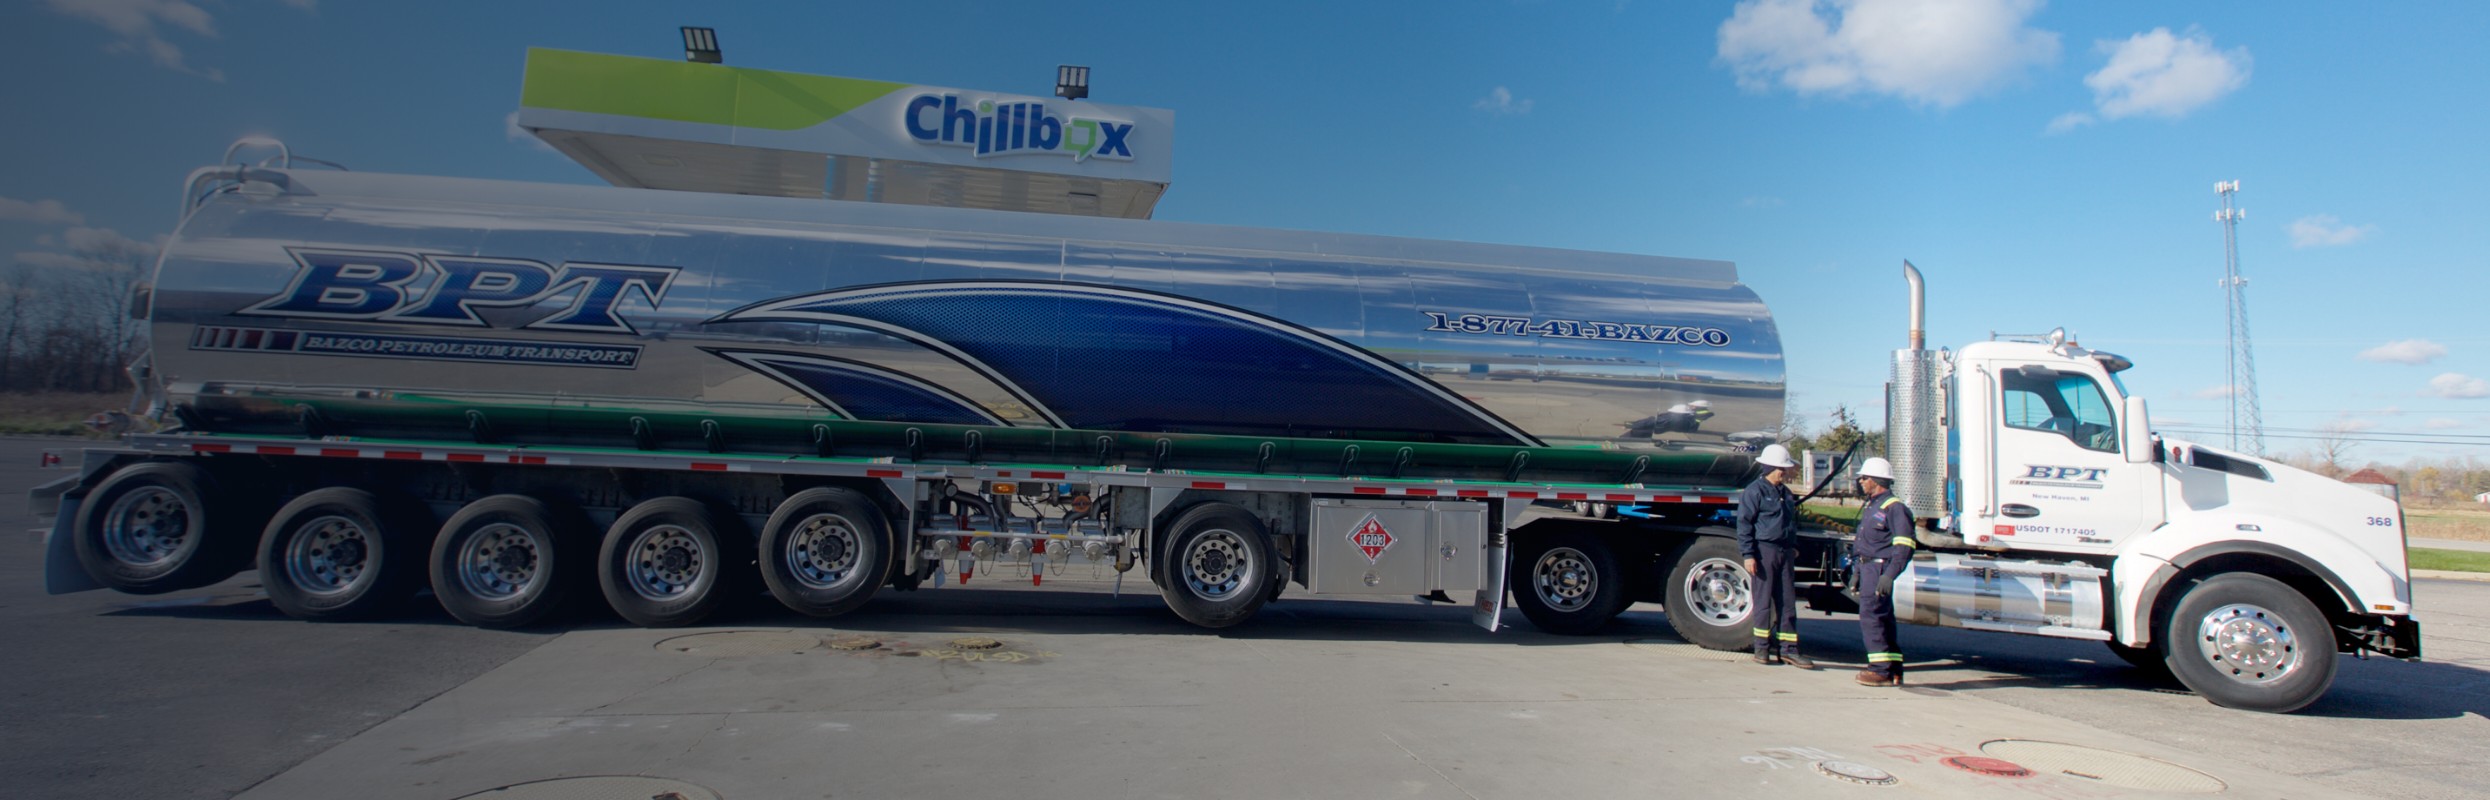 Bazco Oil Petroleum Transport Truck